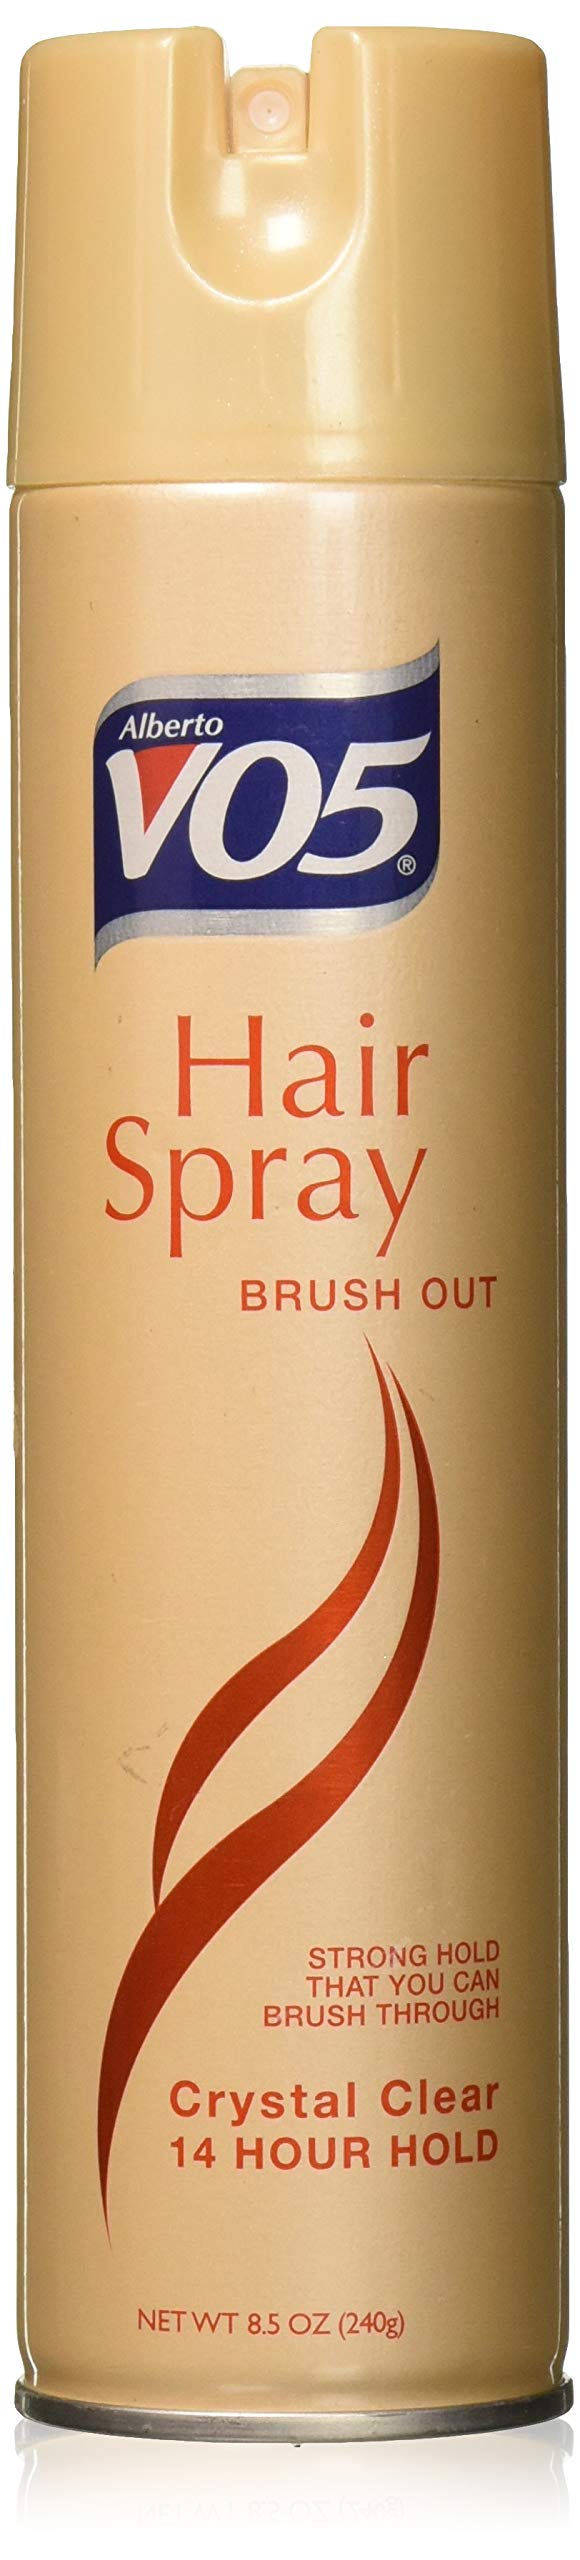 VO5 Aero Hair Spray Brush Out Hard- To-Hold, 8.5 oz | eBay